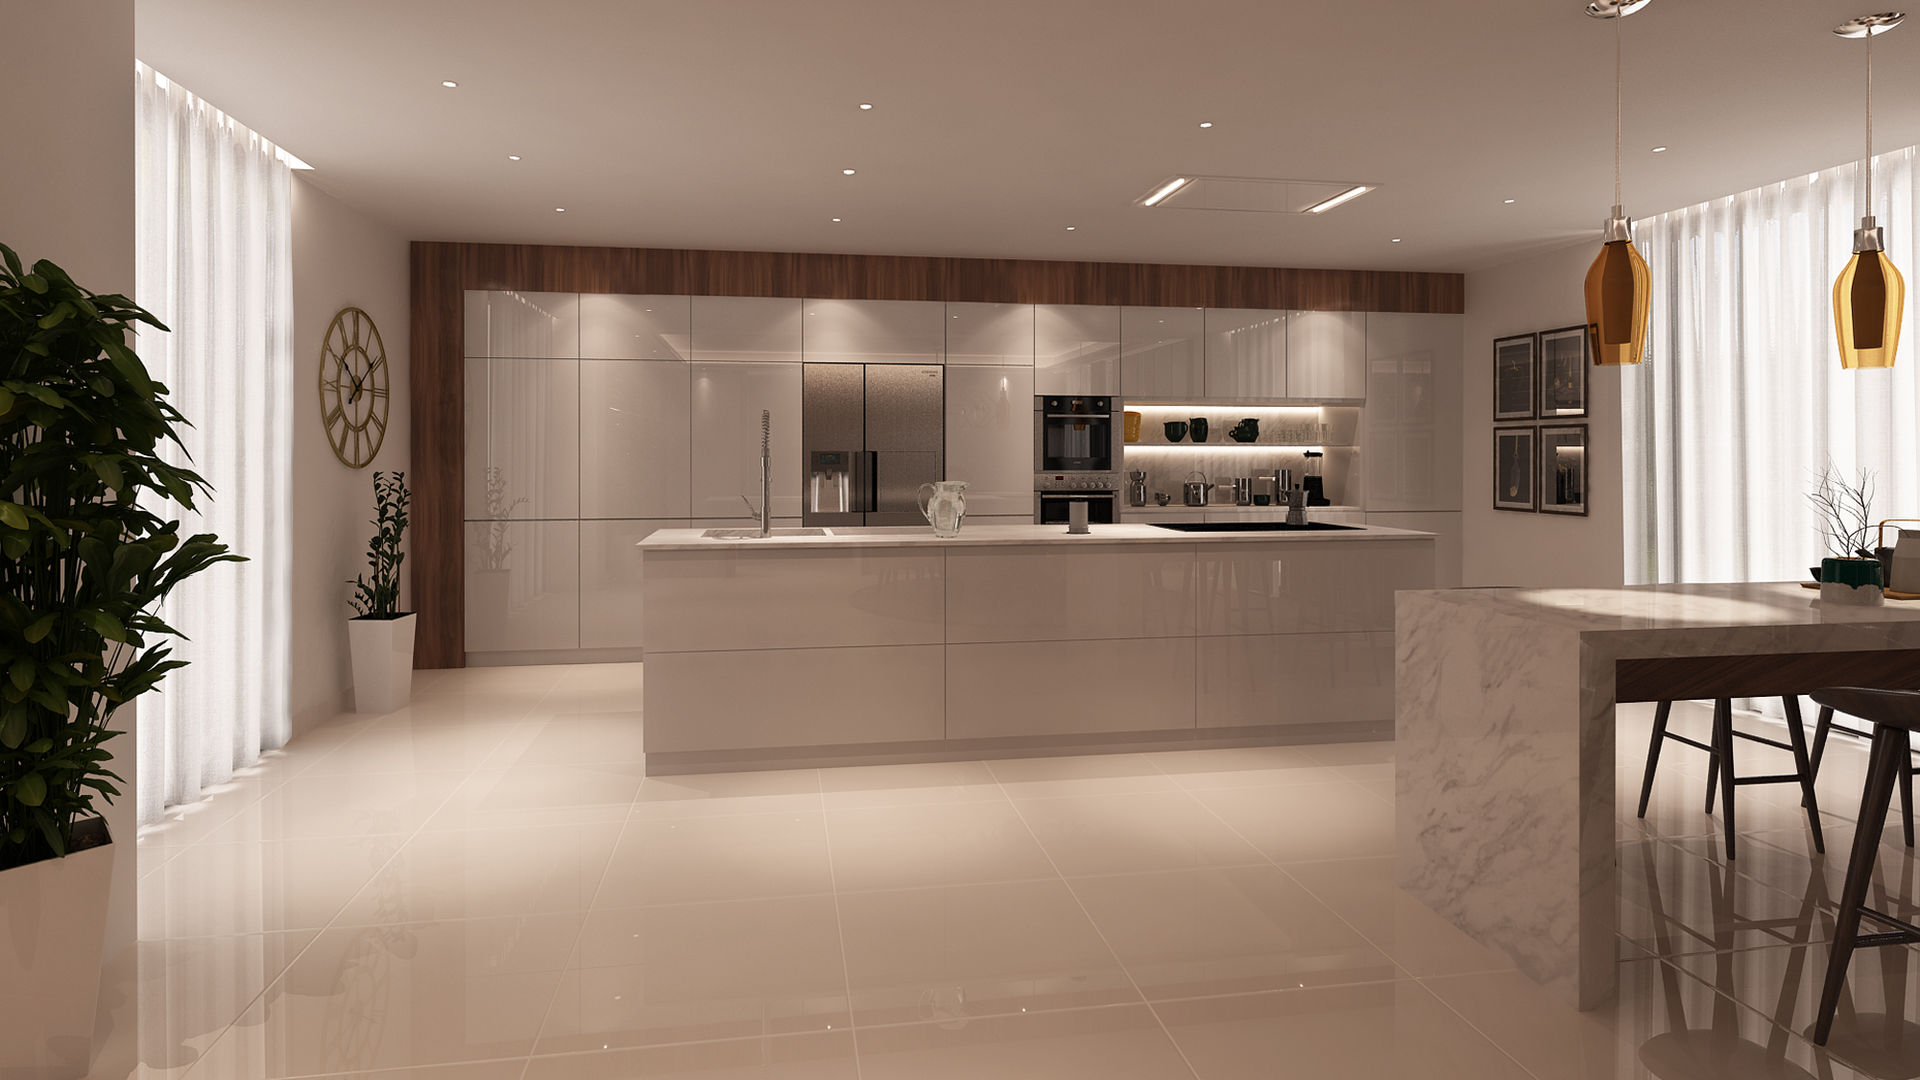 Projecto 3D -Cozinha e Sala de Jantar - Braga, Alpha Details Alpha Details モダンな キッチン